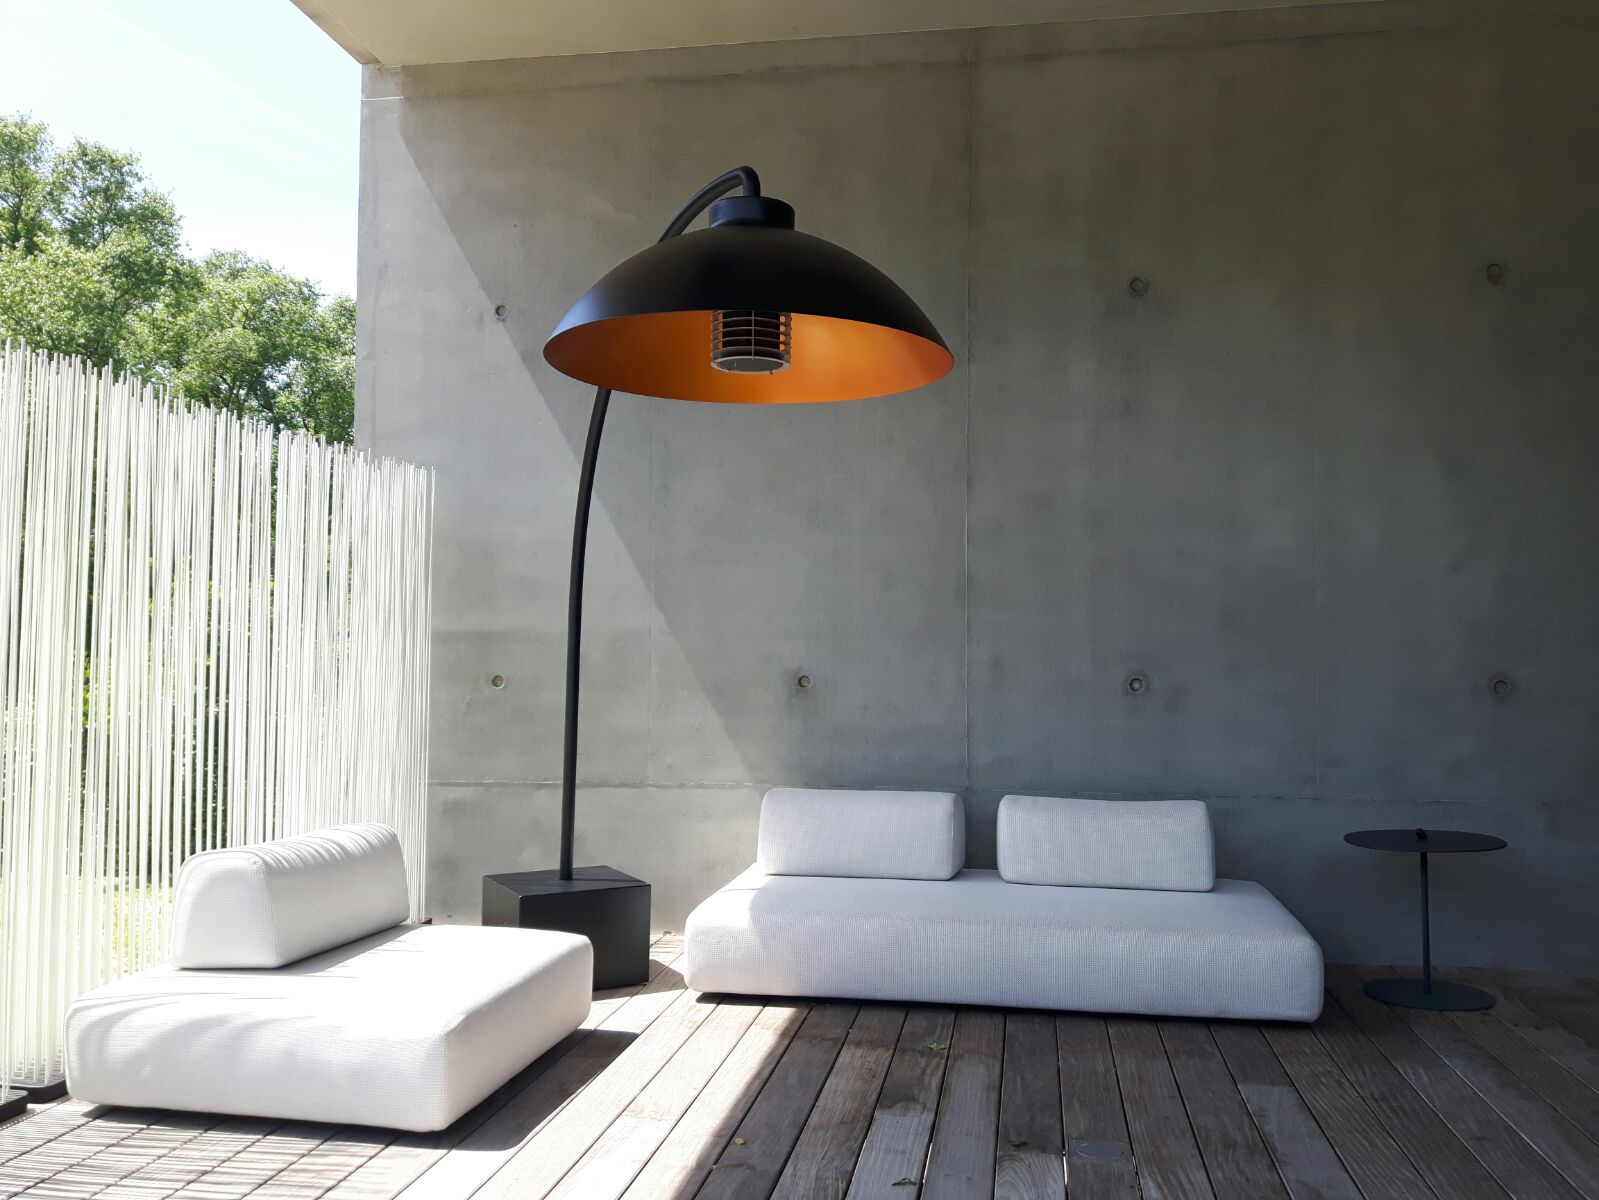 Design lamp met verwarming - DOME - Heatsail - Extend great